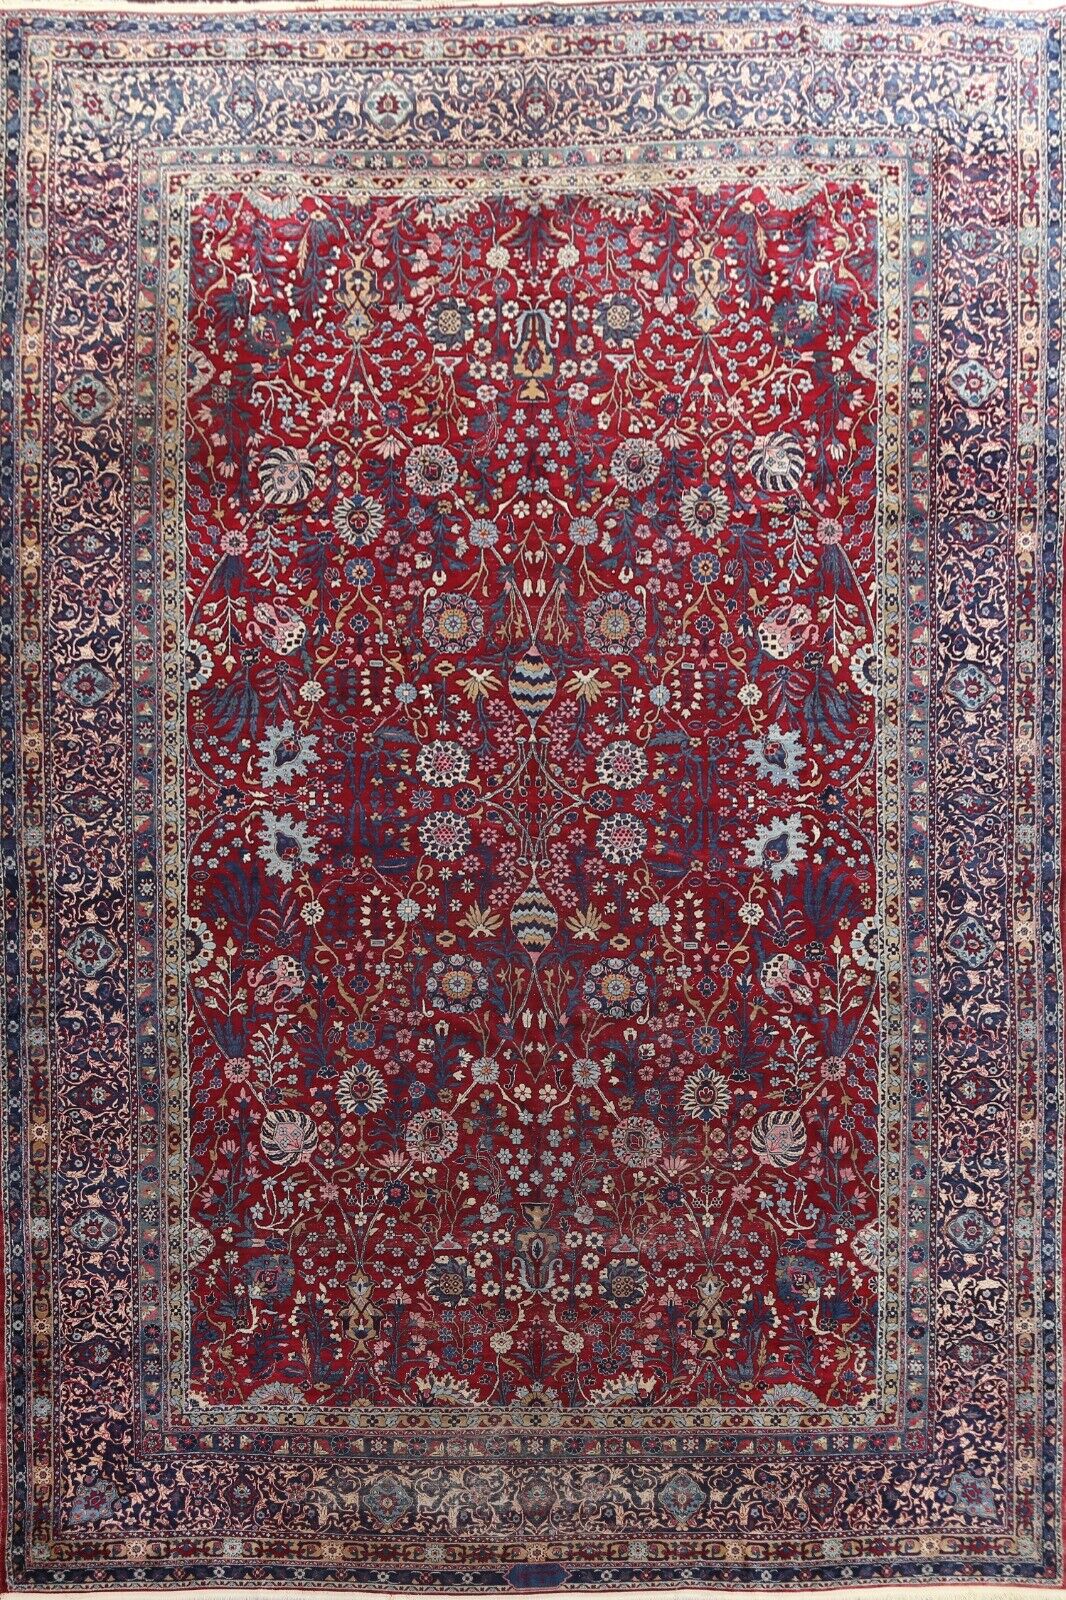 Antique RED Vegetable Dye Kirman Lavar Area Rug Hand-knotted Large Carpet 10x15